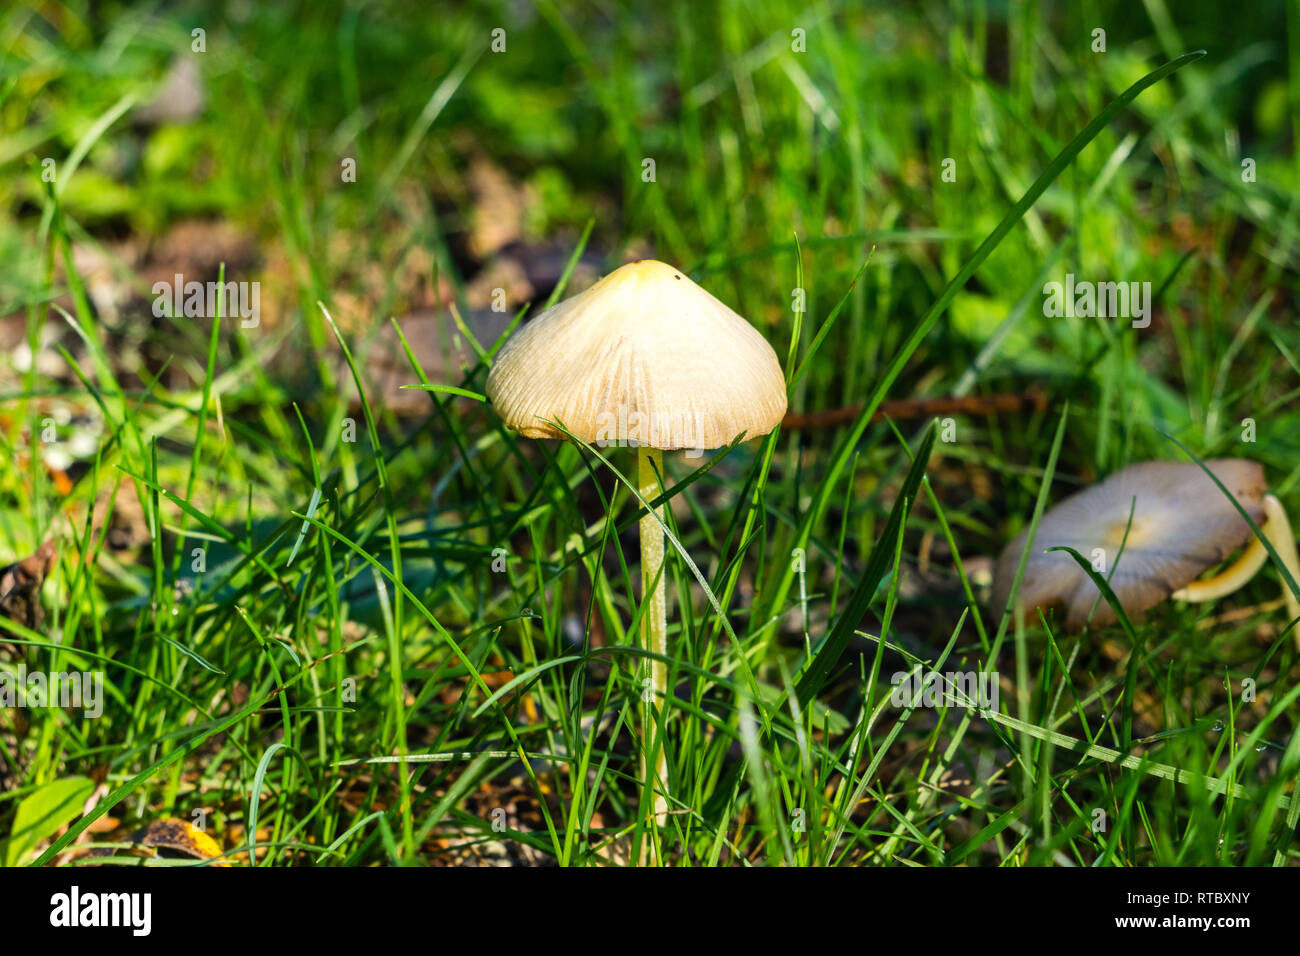 Creamy mushroom surrounded by grass, California Stock Photo